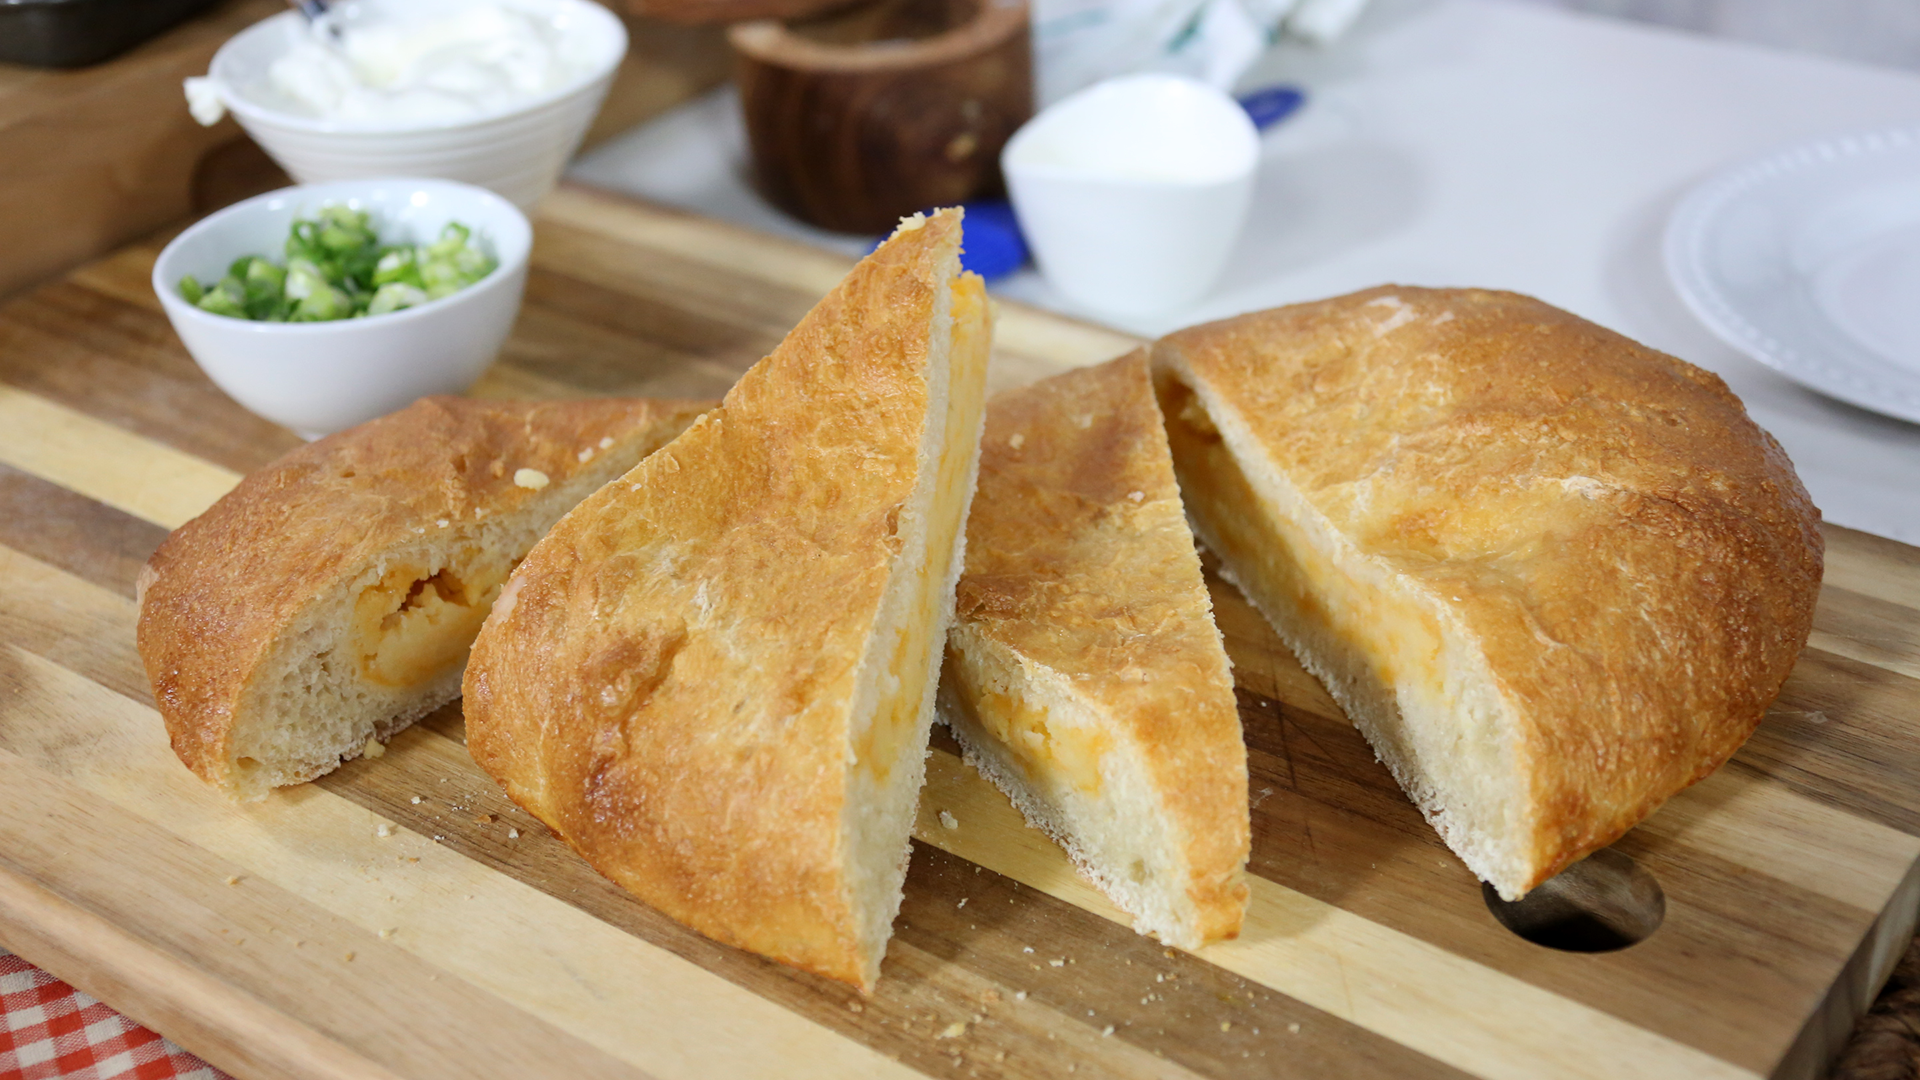 Potato cheddar “pierogi” bread